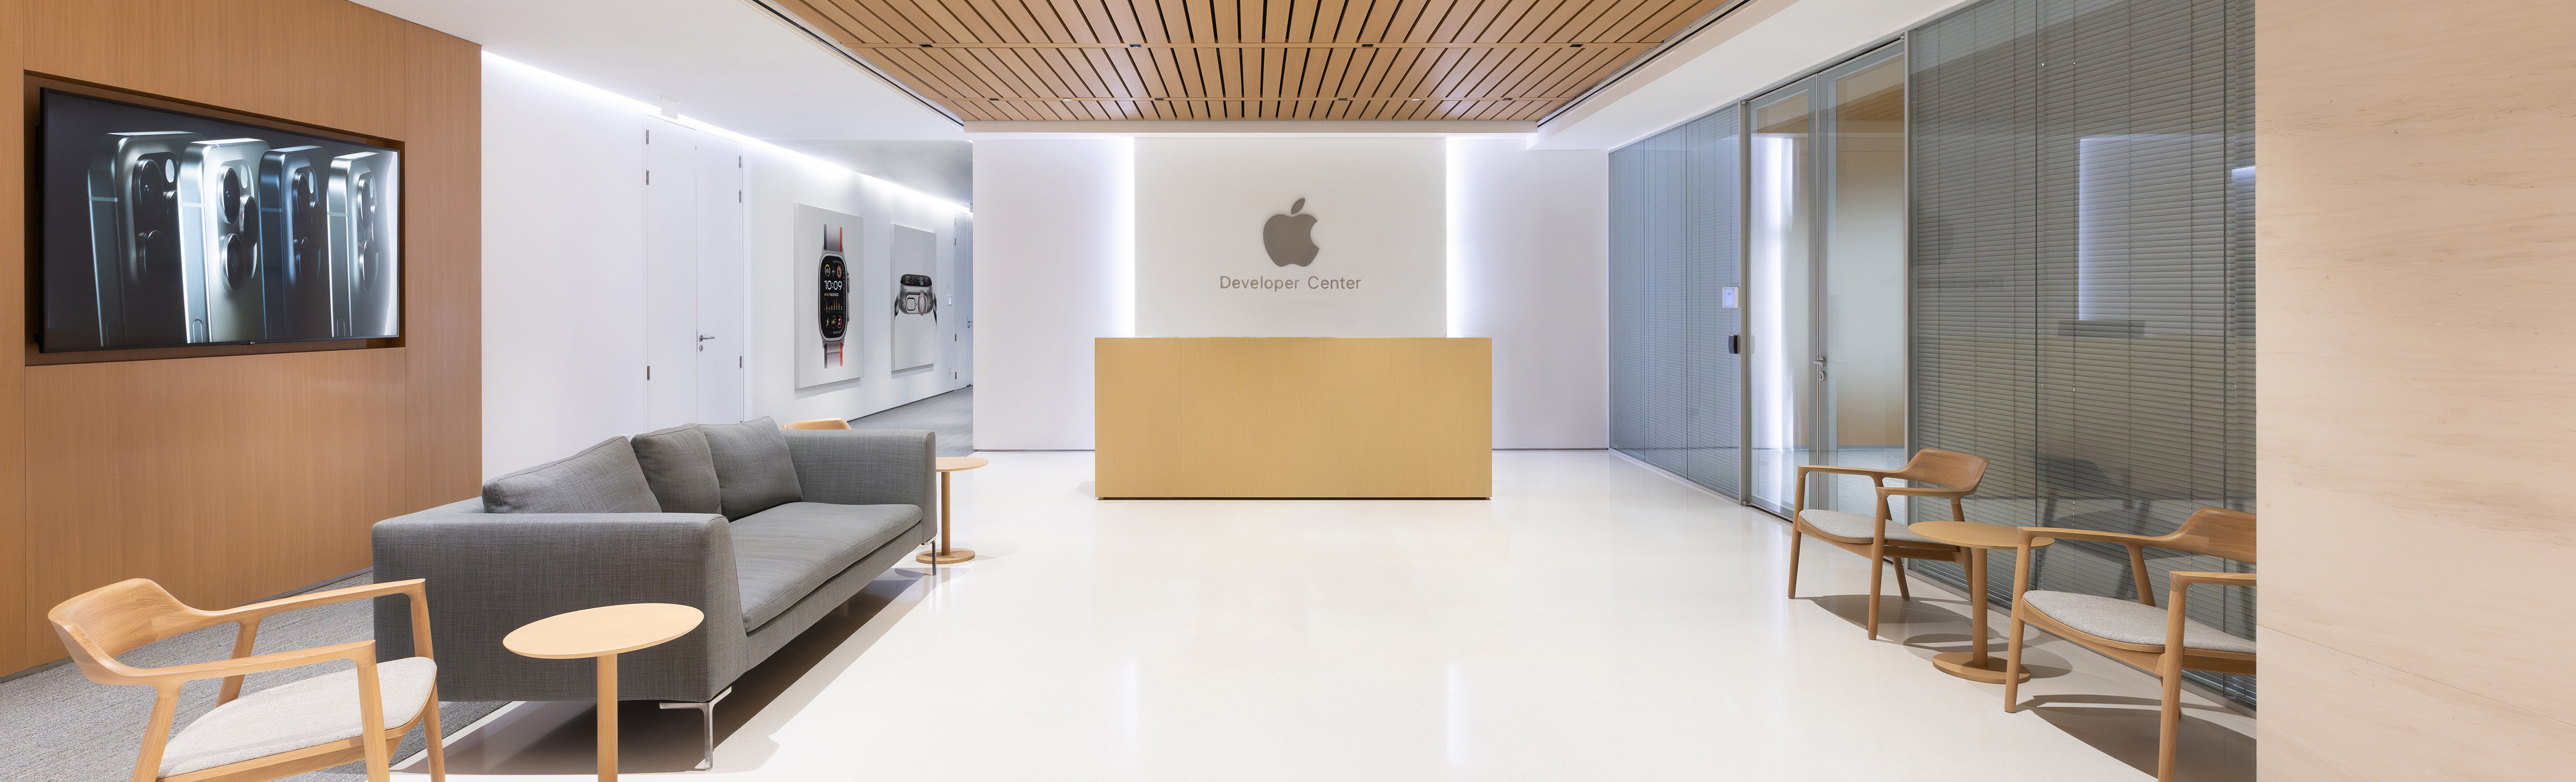 Apple Developer Centerの陽光あふれる開放的な室内。グレーのソファと数脚の木製の椅子が配置され、大きなAppleのロゴの下に受付カウンターがあります。